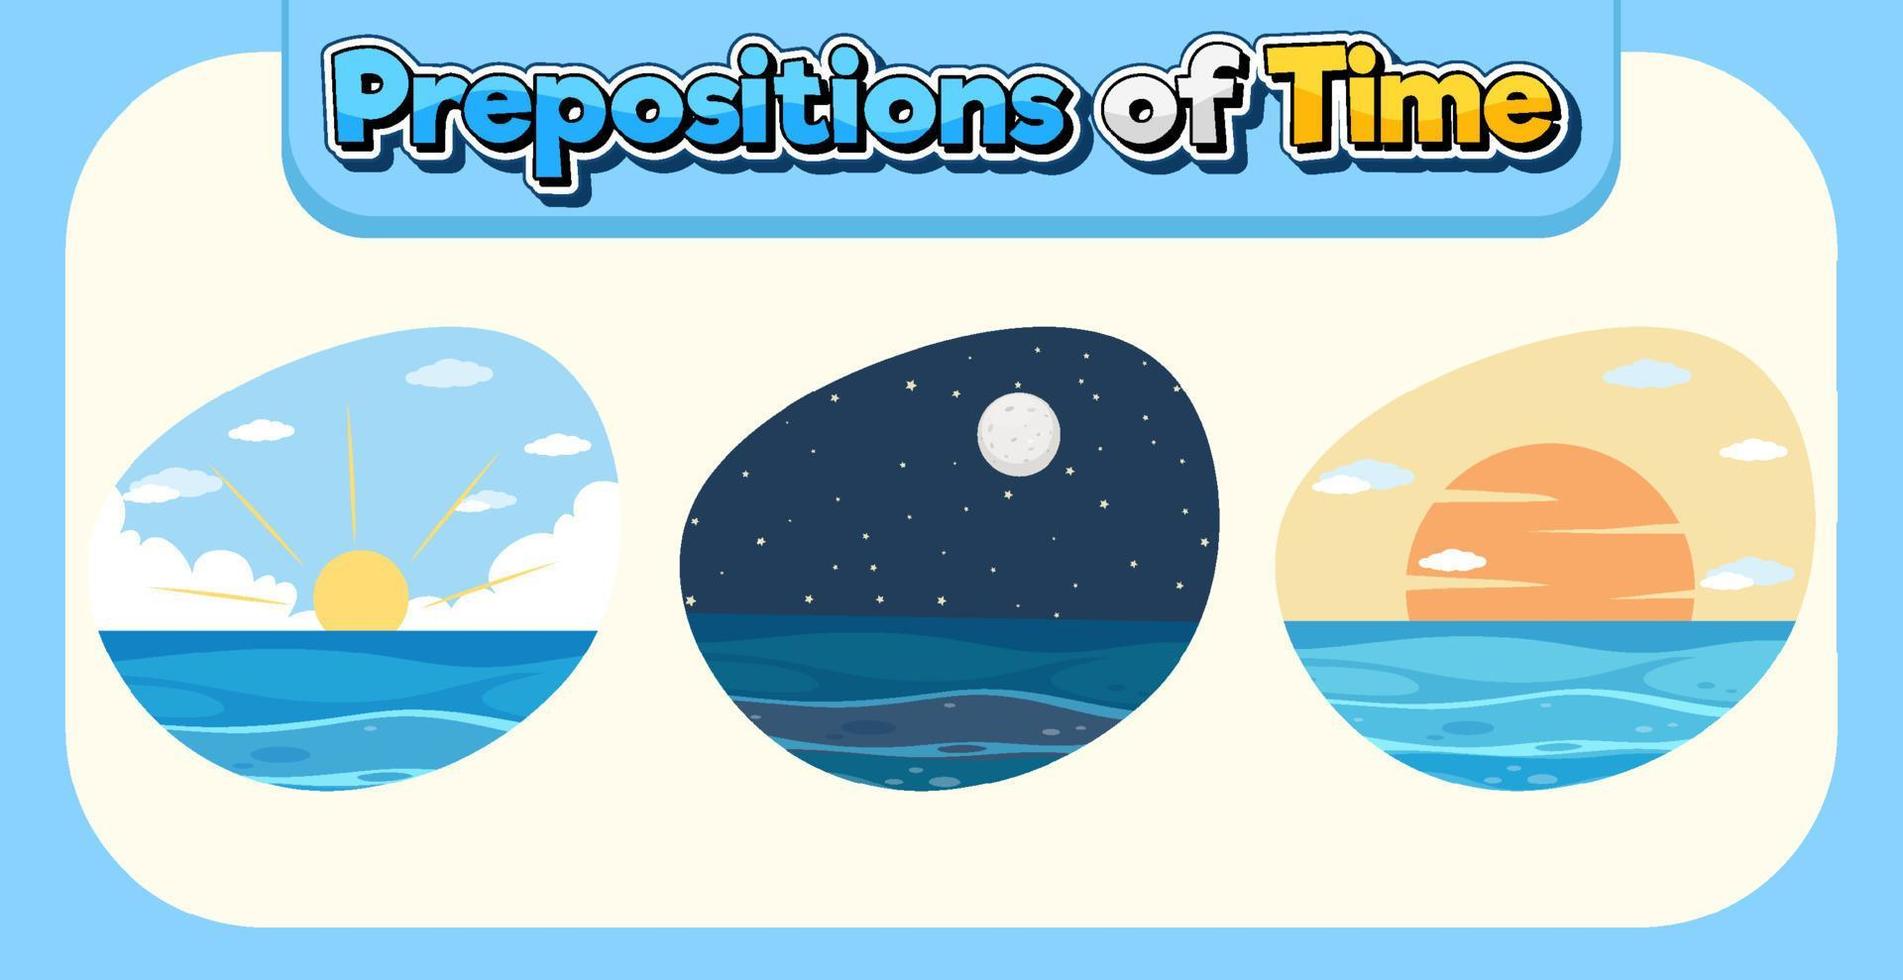 Preposition of time poster design vector